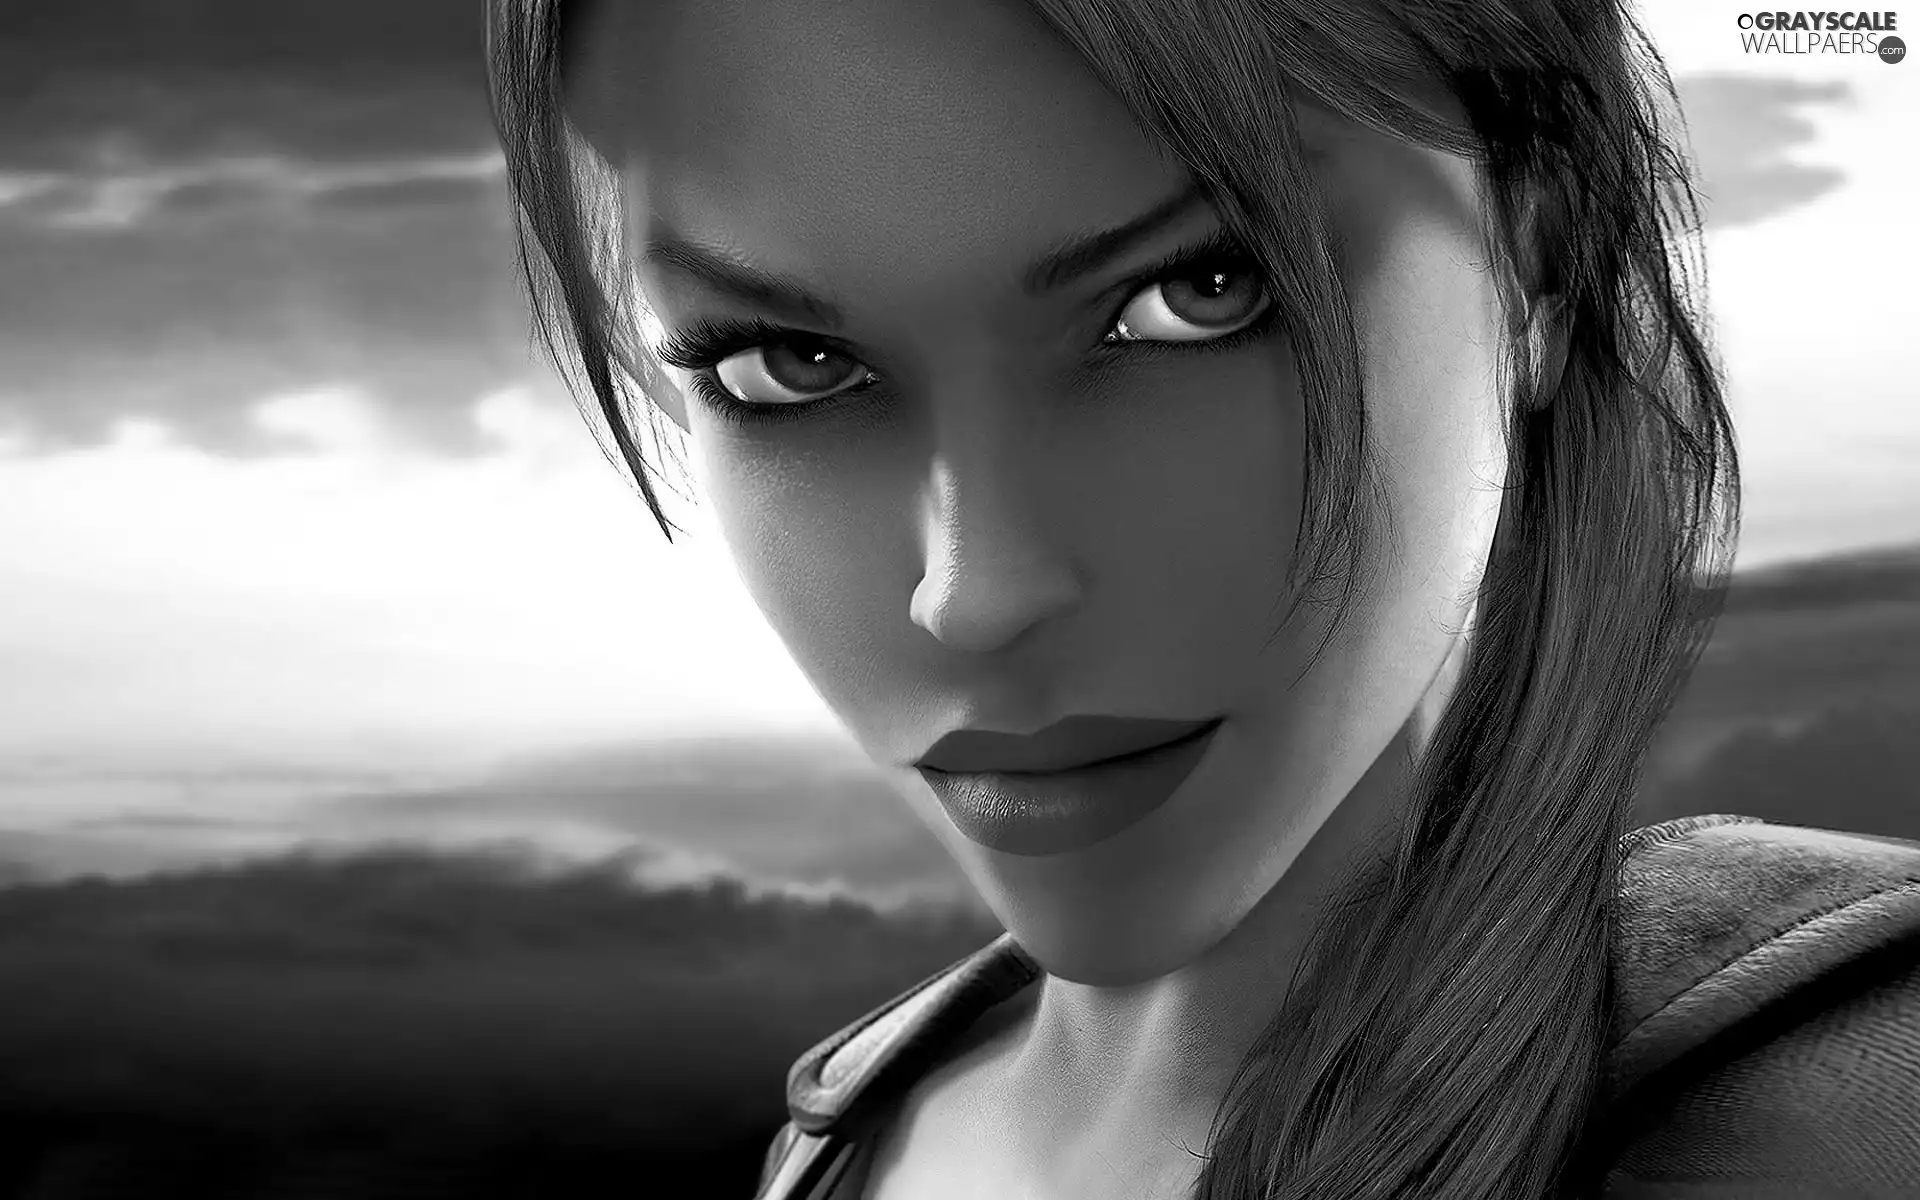 portrait, Lara Croft